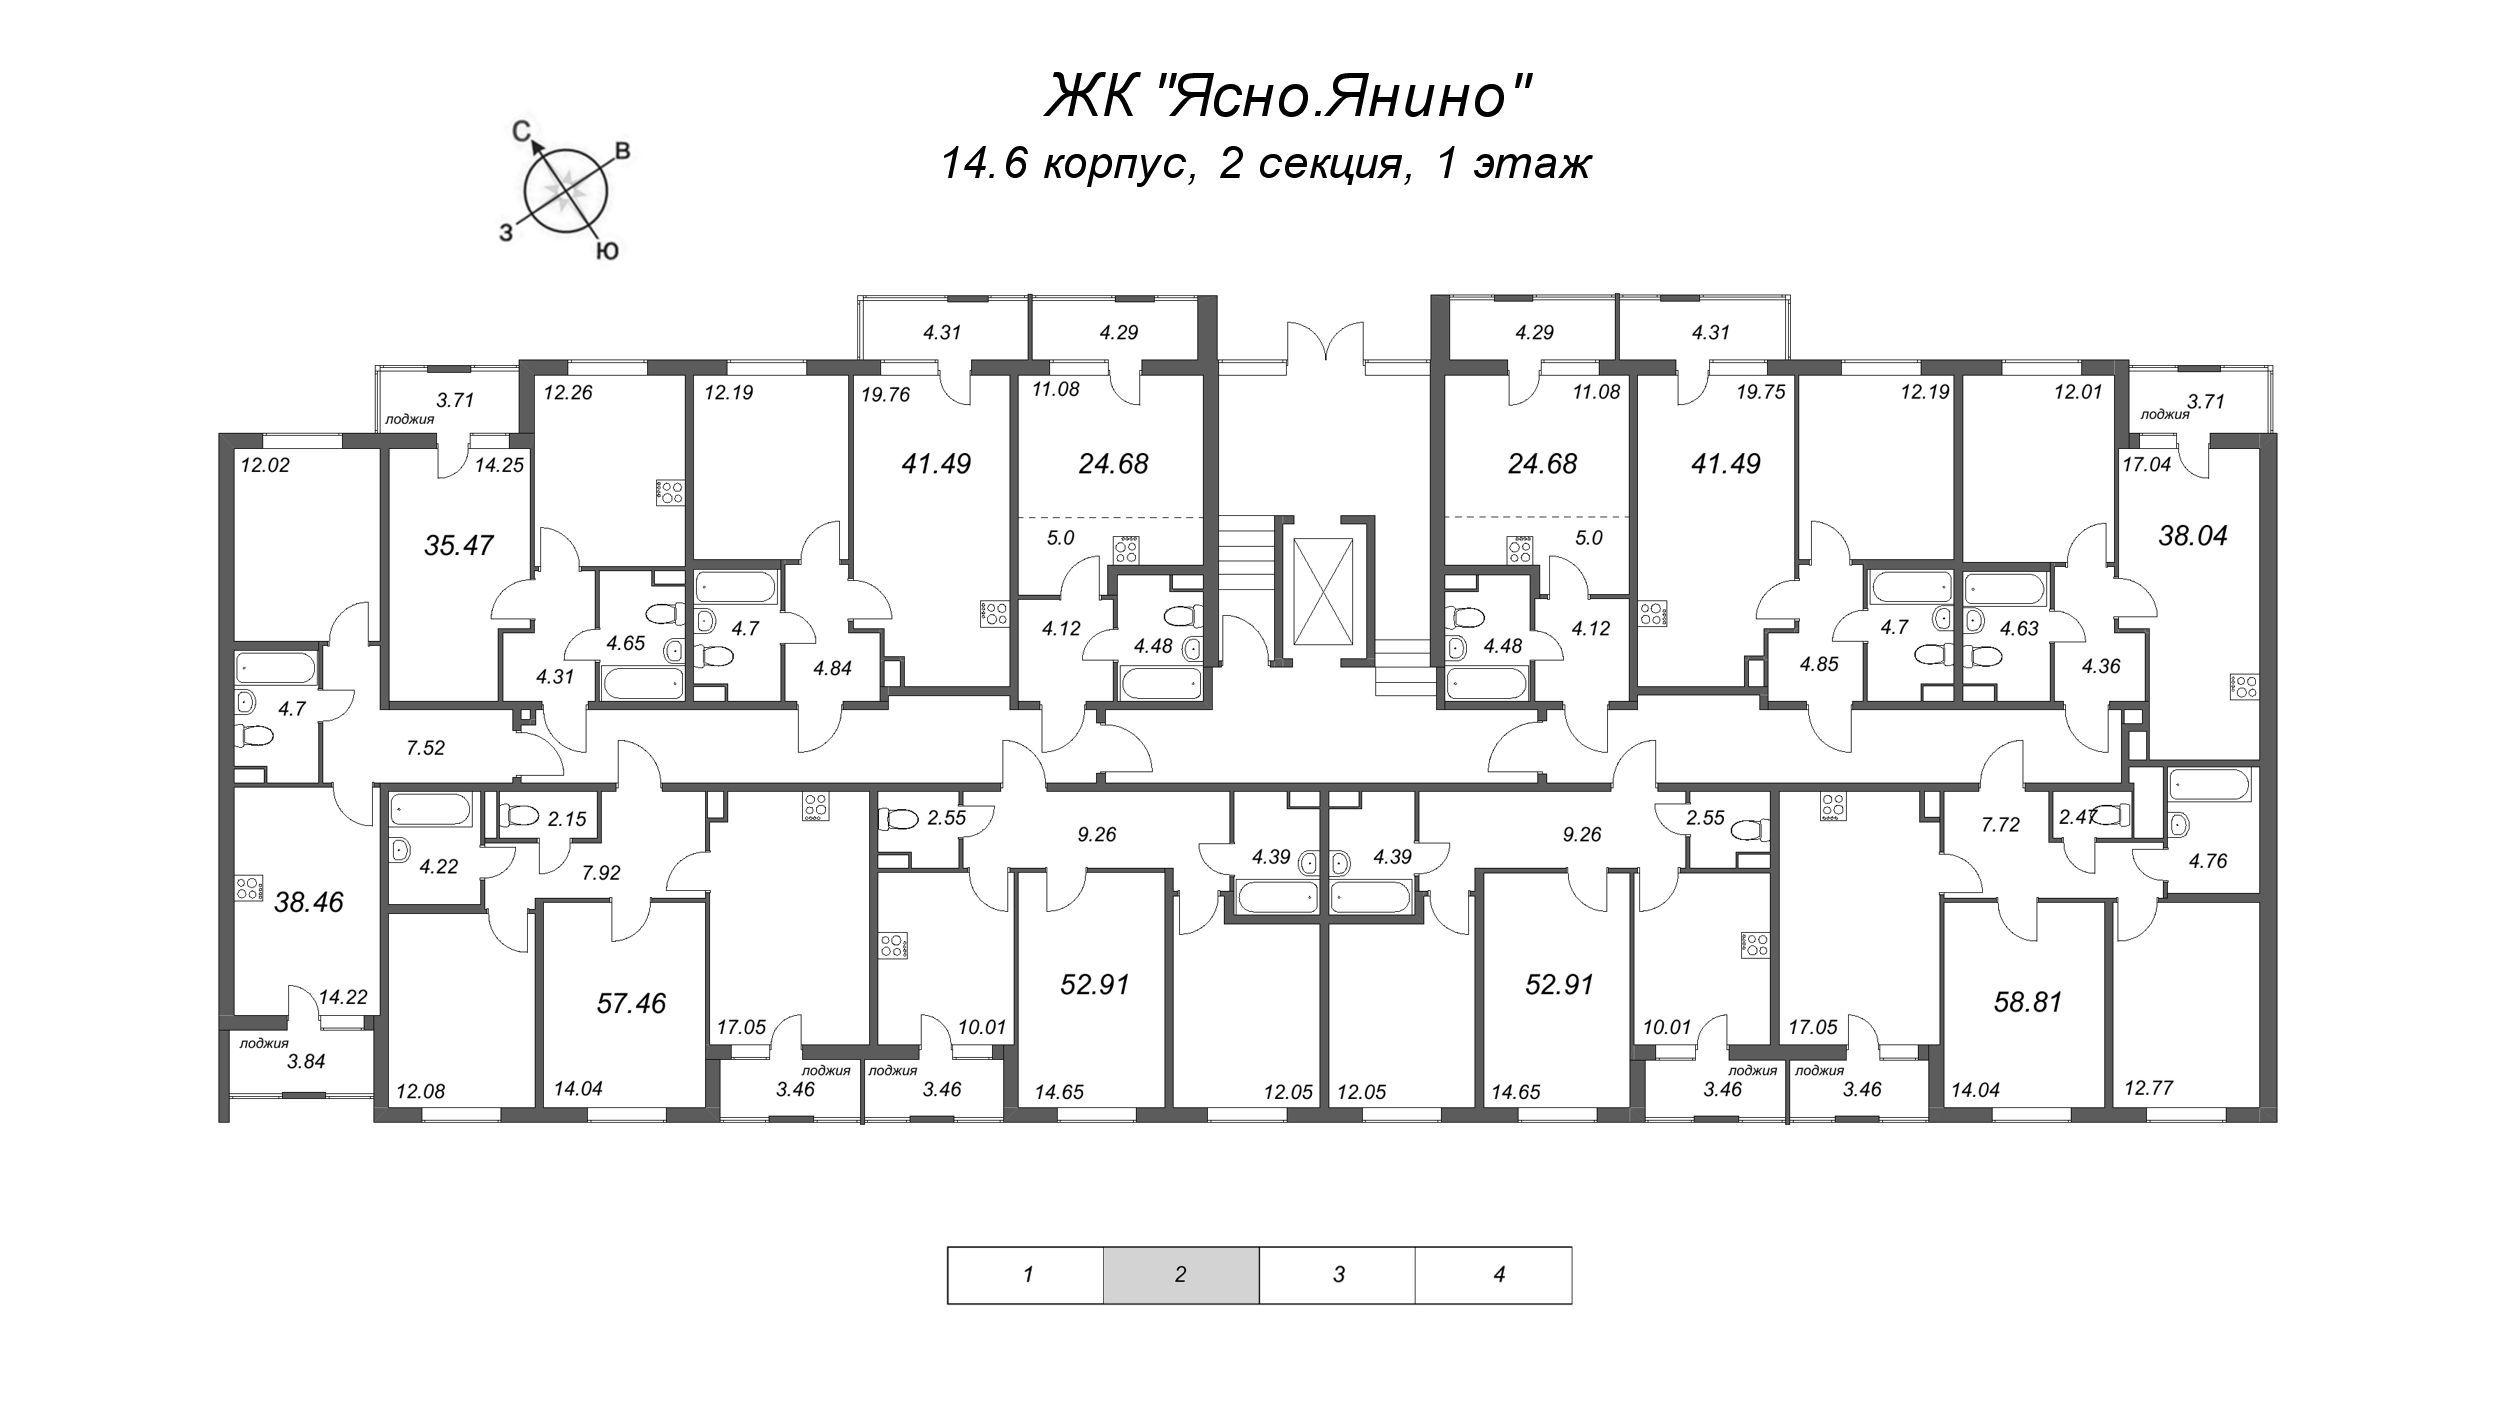 3-комнатная (Евро) квартира, 58.81 м² - планировка этажа